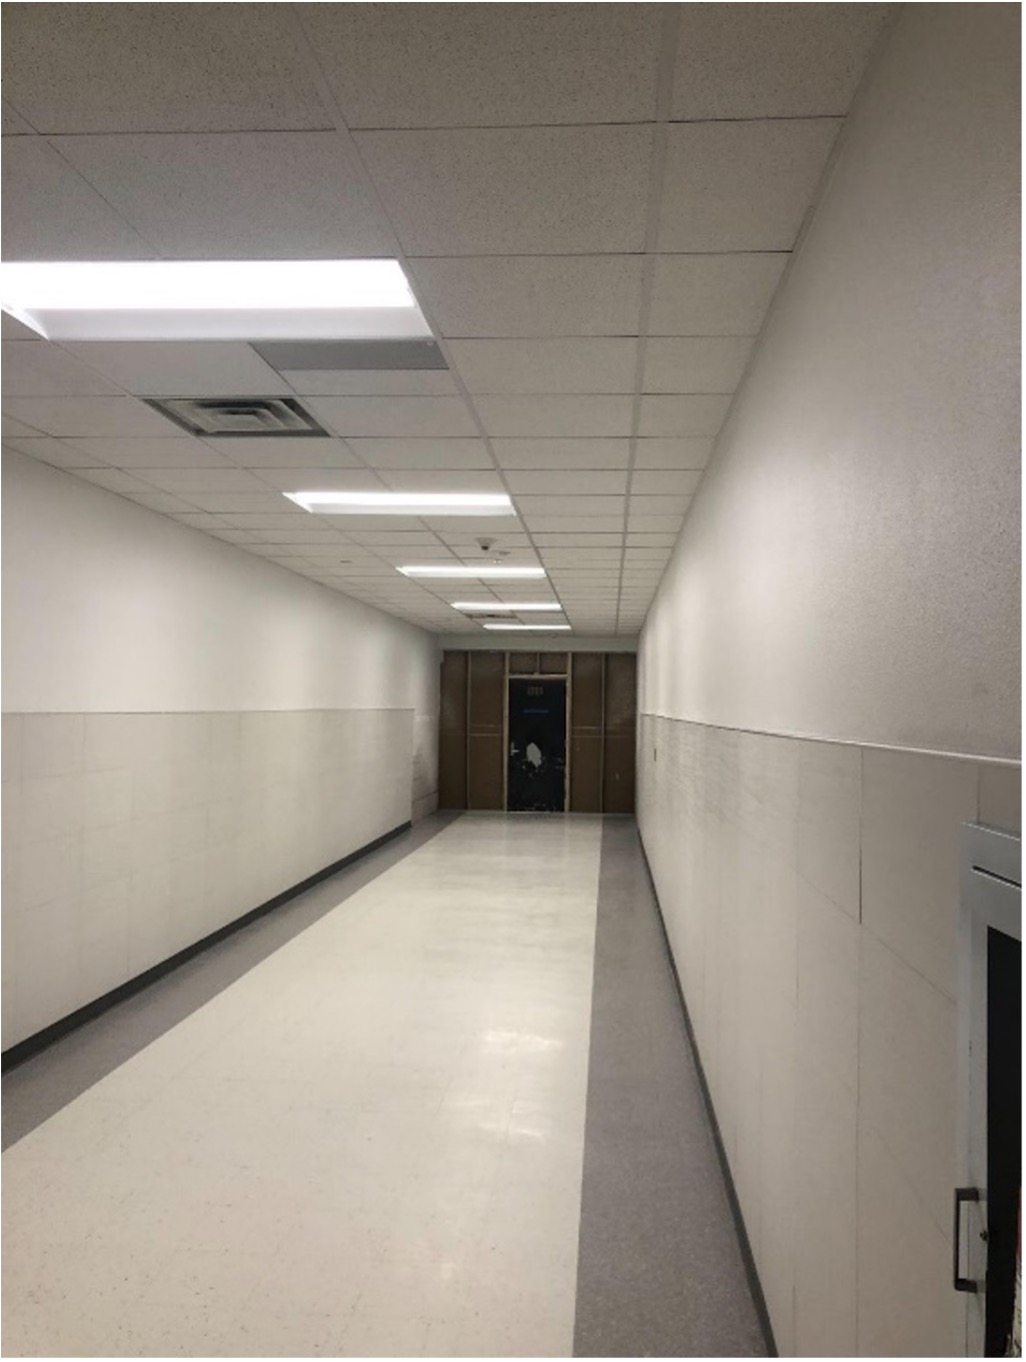 Renovated FHMS hallway